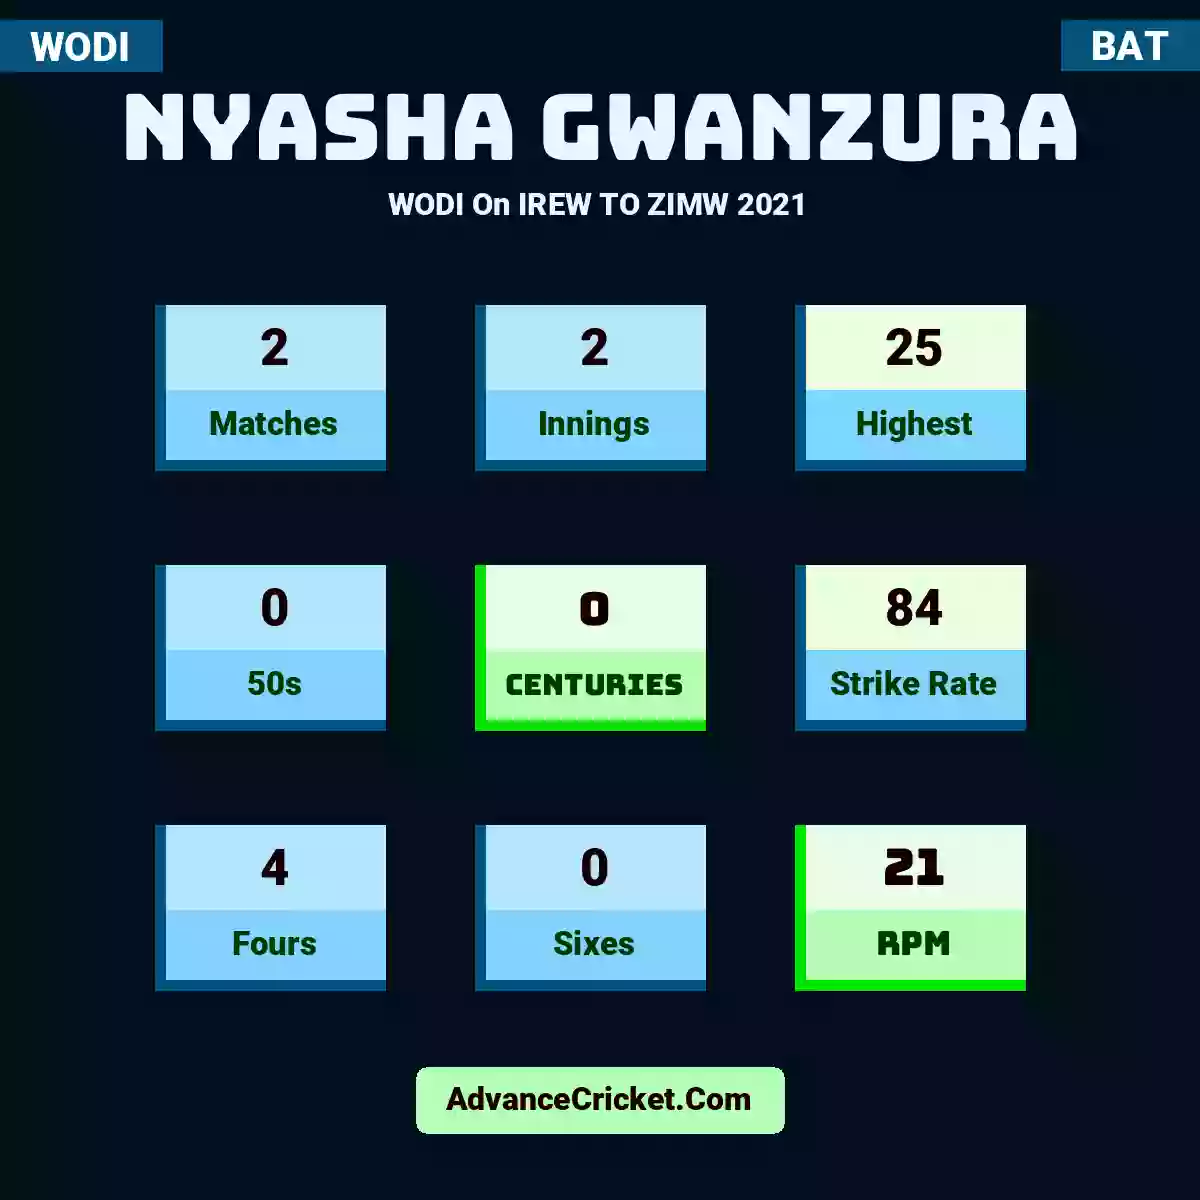 Nyasha Gwanzura WODI  On IREW TO ZIMW 2021, Nyasha Gwanzura played 2 matches, scored 25 runs as highest, 0 half-centuries, and 0 centuries, with a strike rate of 84. N.Gwanzura hit 4 fours and 0 sixes, with an RPM of 21.